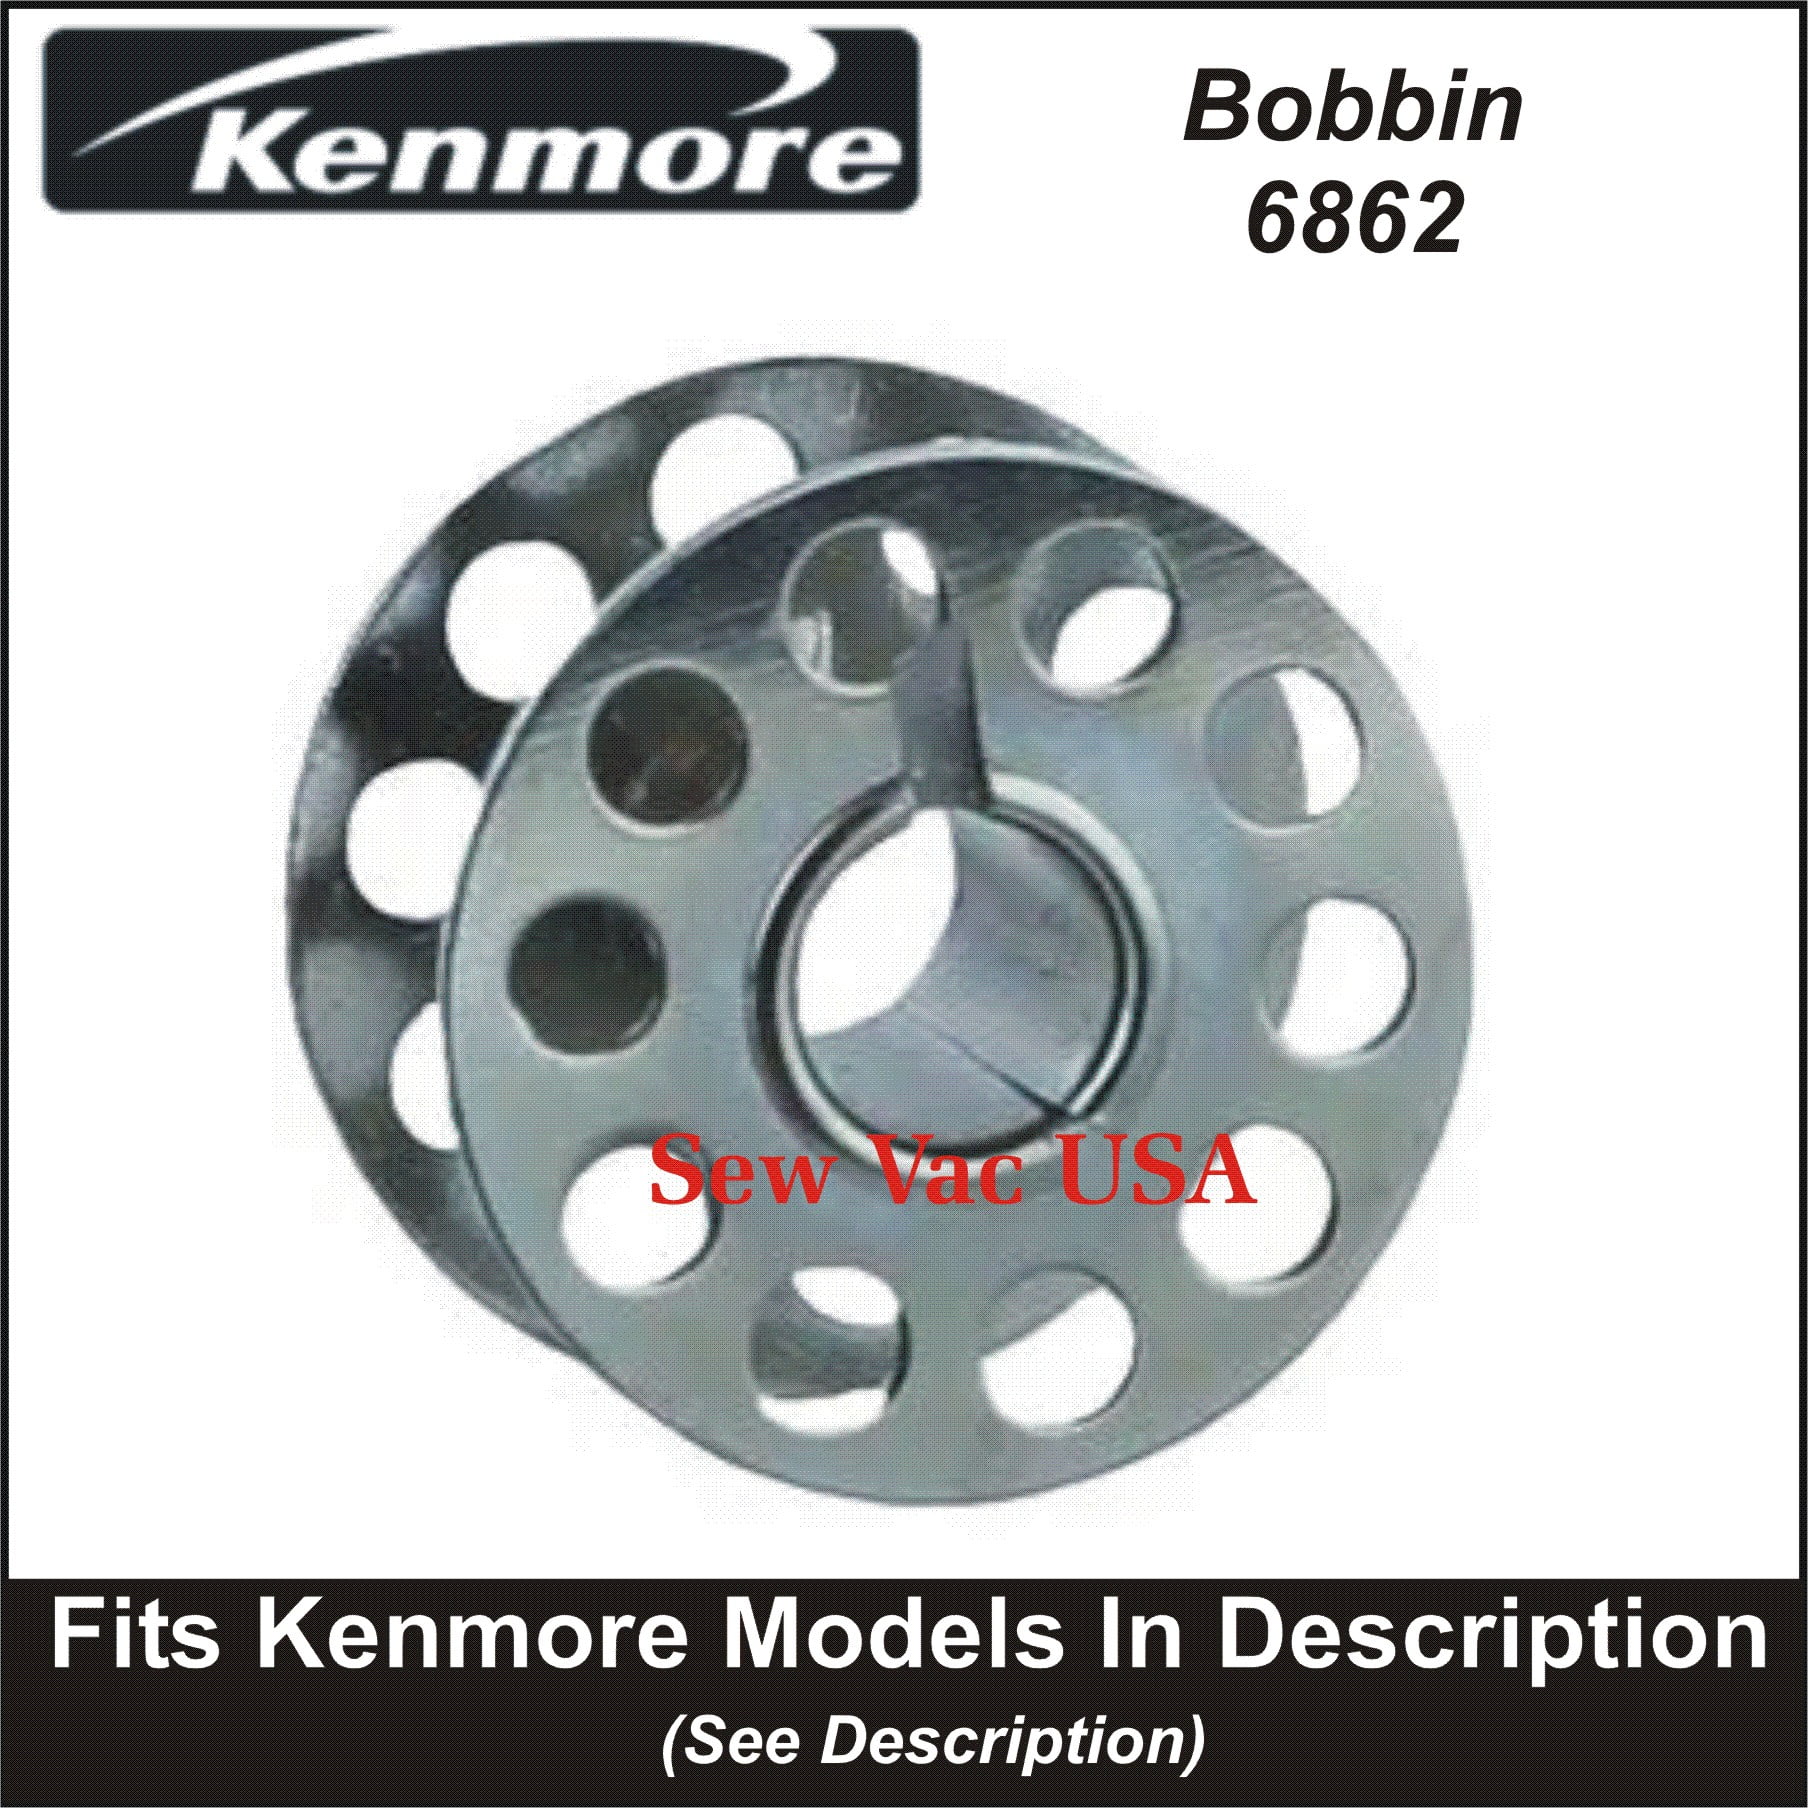 Kenmore Bobbins 744 10pk Fits Rotary Models In Description